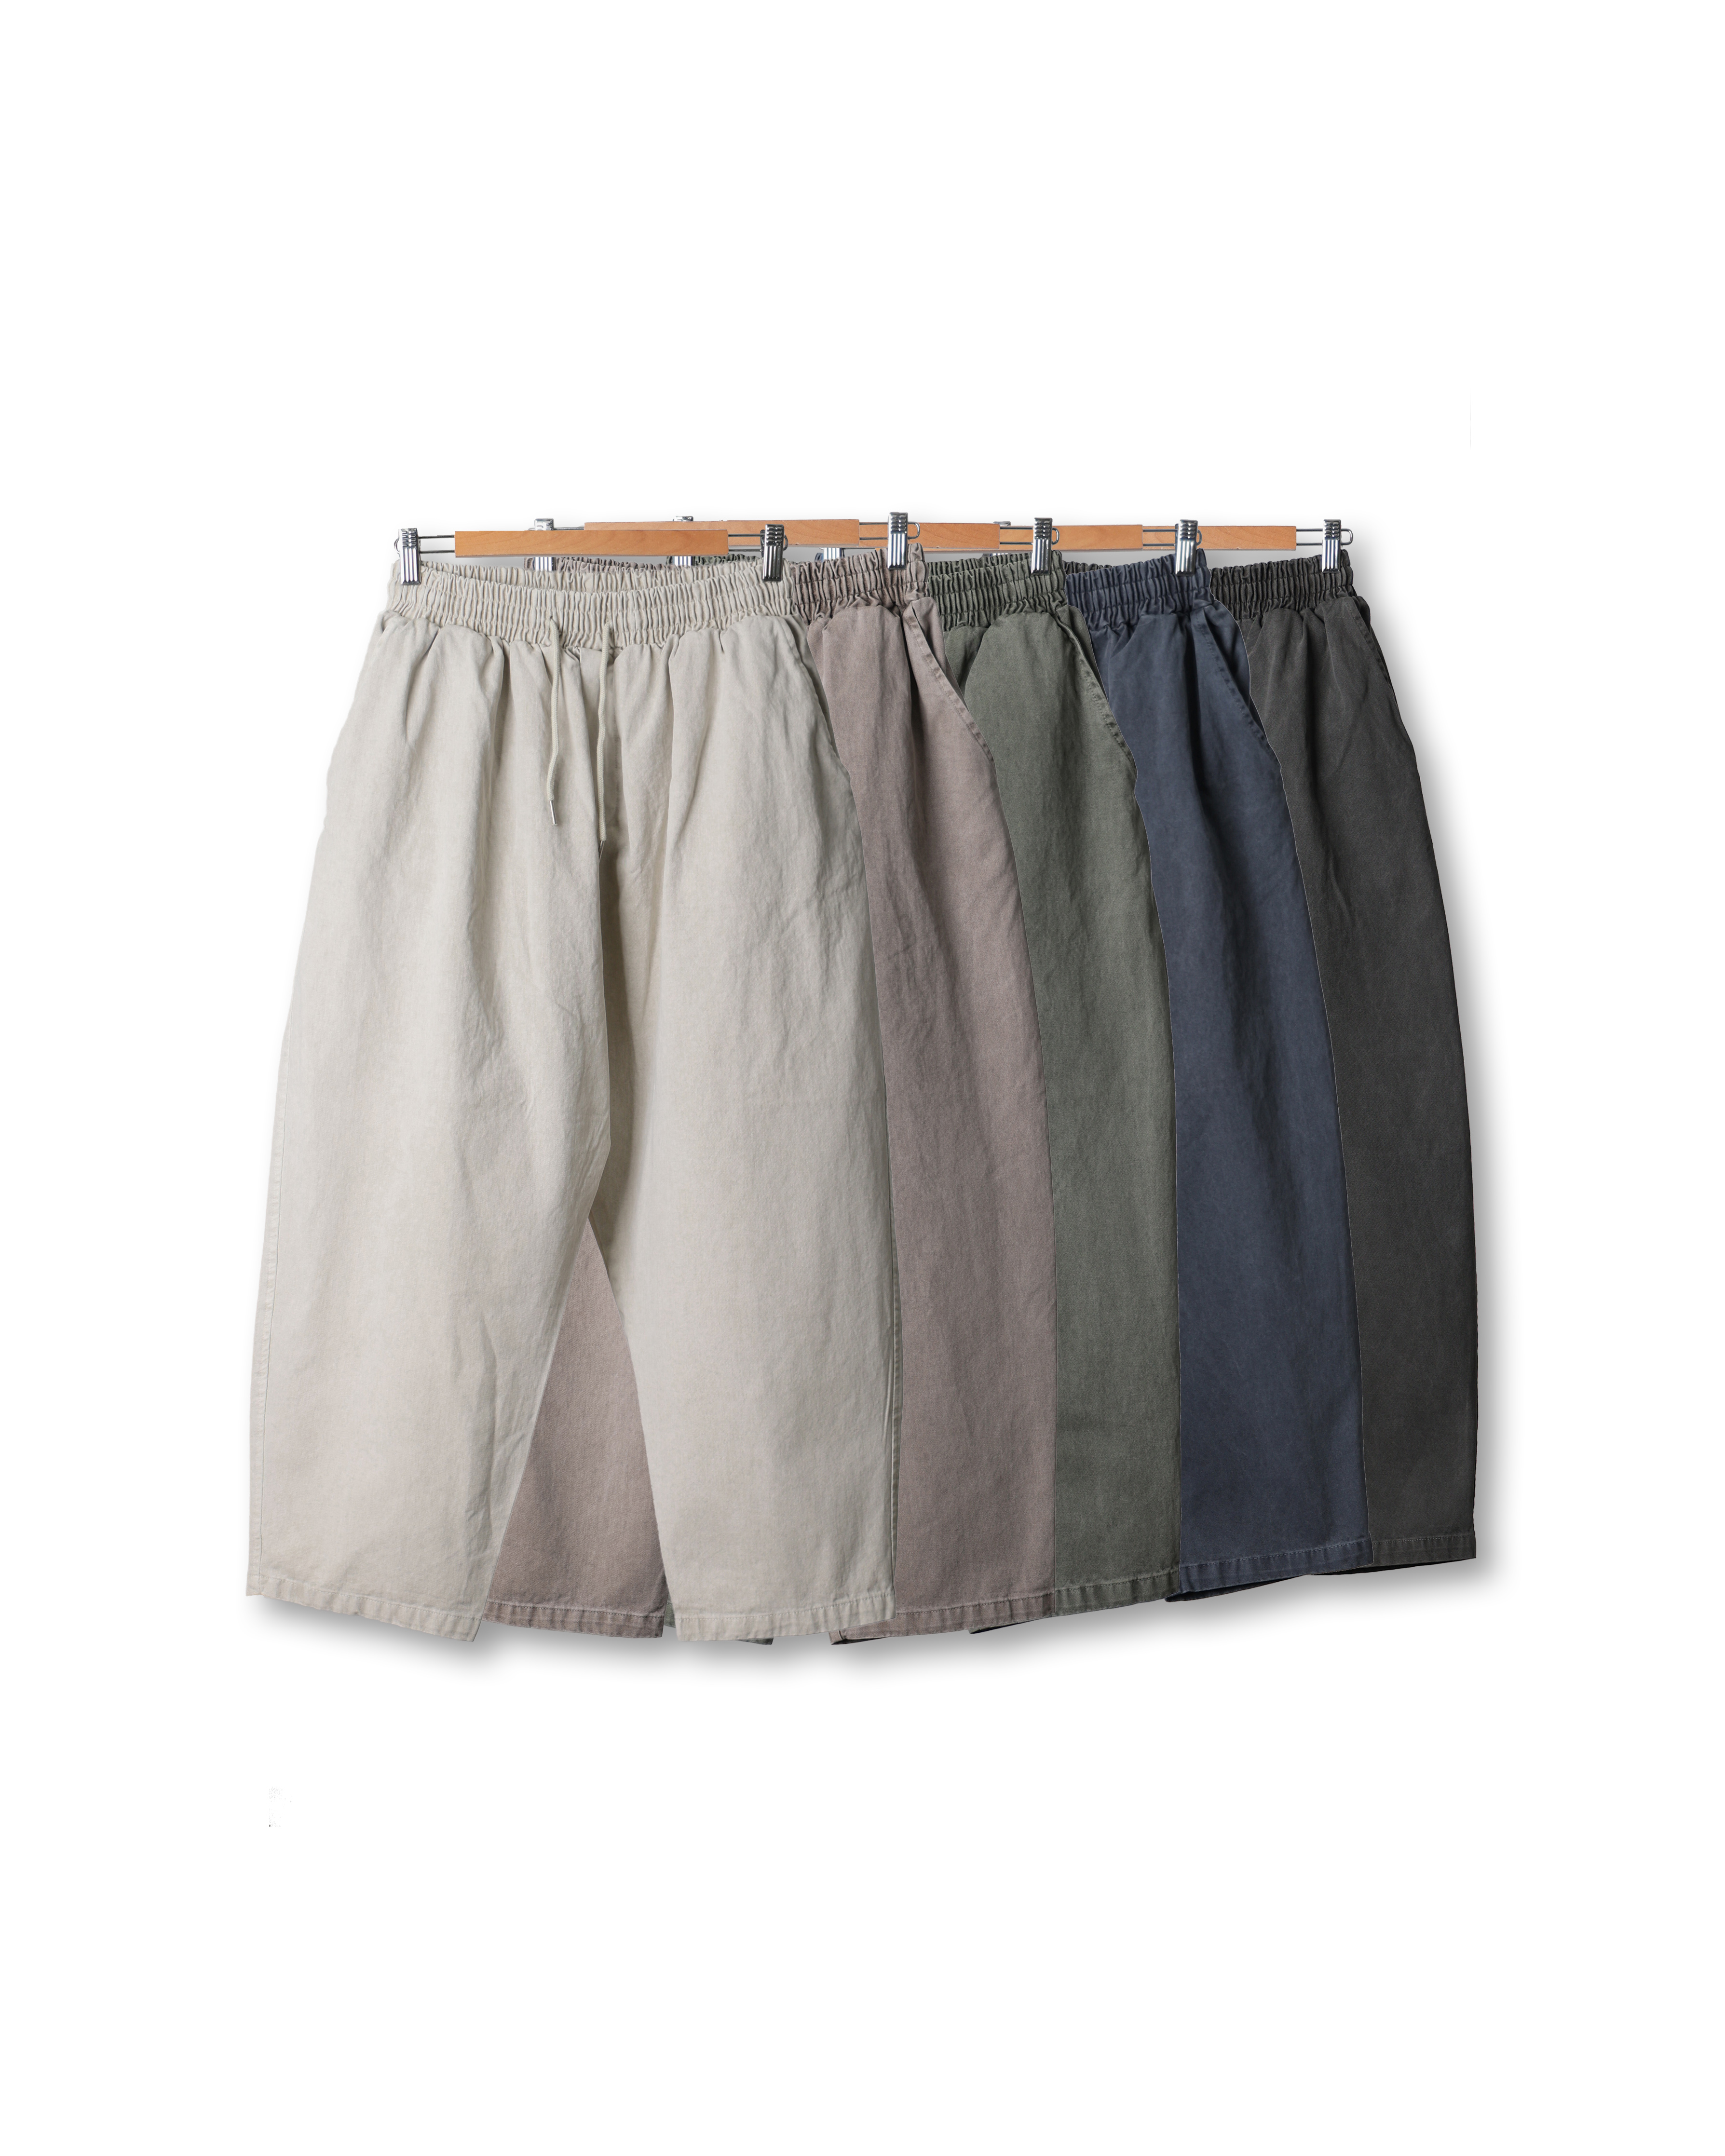 RARA Pigments Crop Loose Balloon Pants (Charcoal/Navy/Olive/Beige/Ivory) - 2차 리오더 (4/1 배송예정)